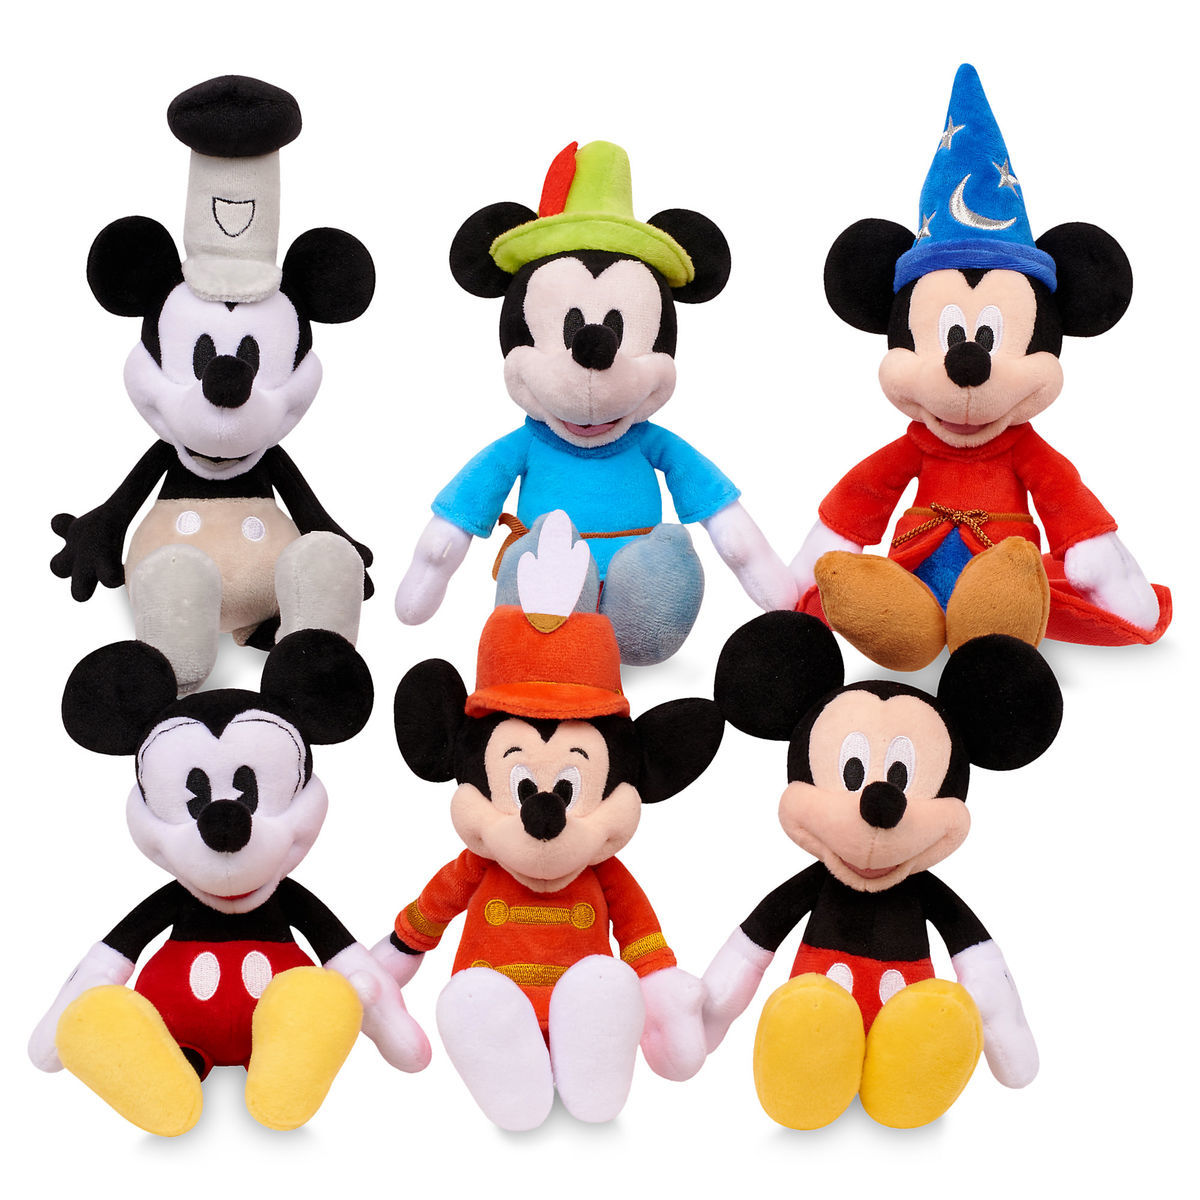 Disney Mickey The True Original Plush Set Mickey Through the Years Small New